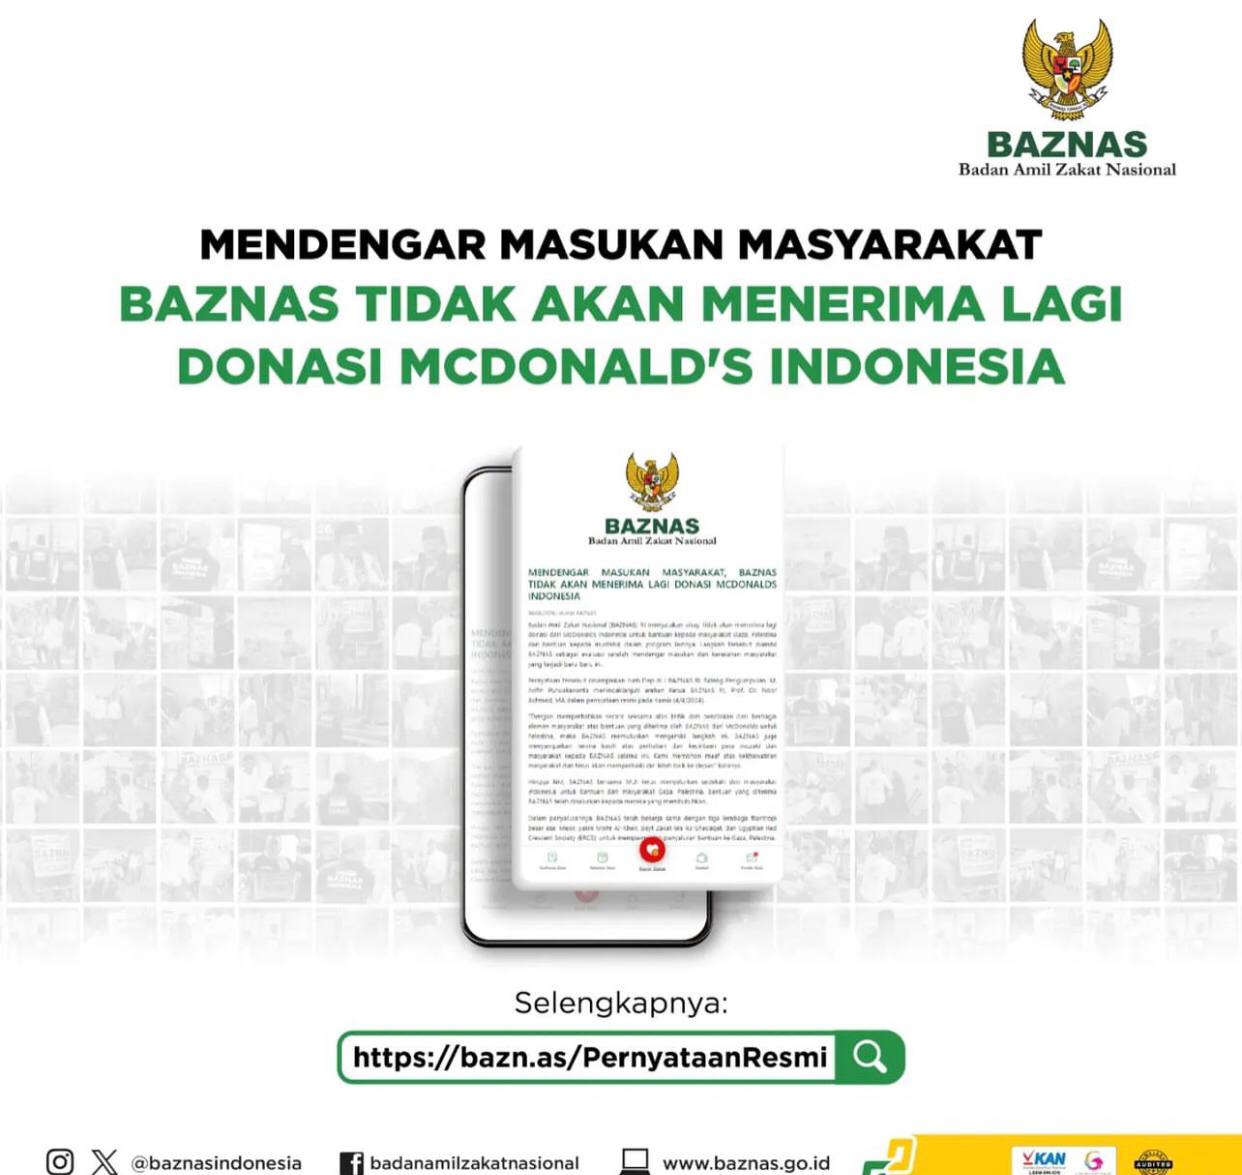 Akhirnya Baznas RI Setop Terima Donasi McDonald's Indonesia 